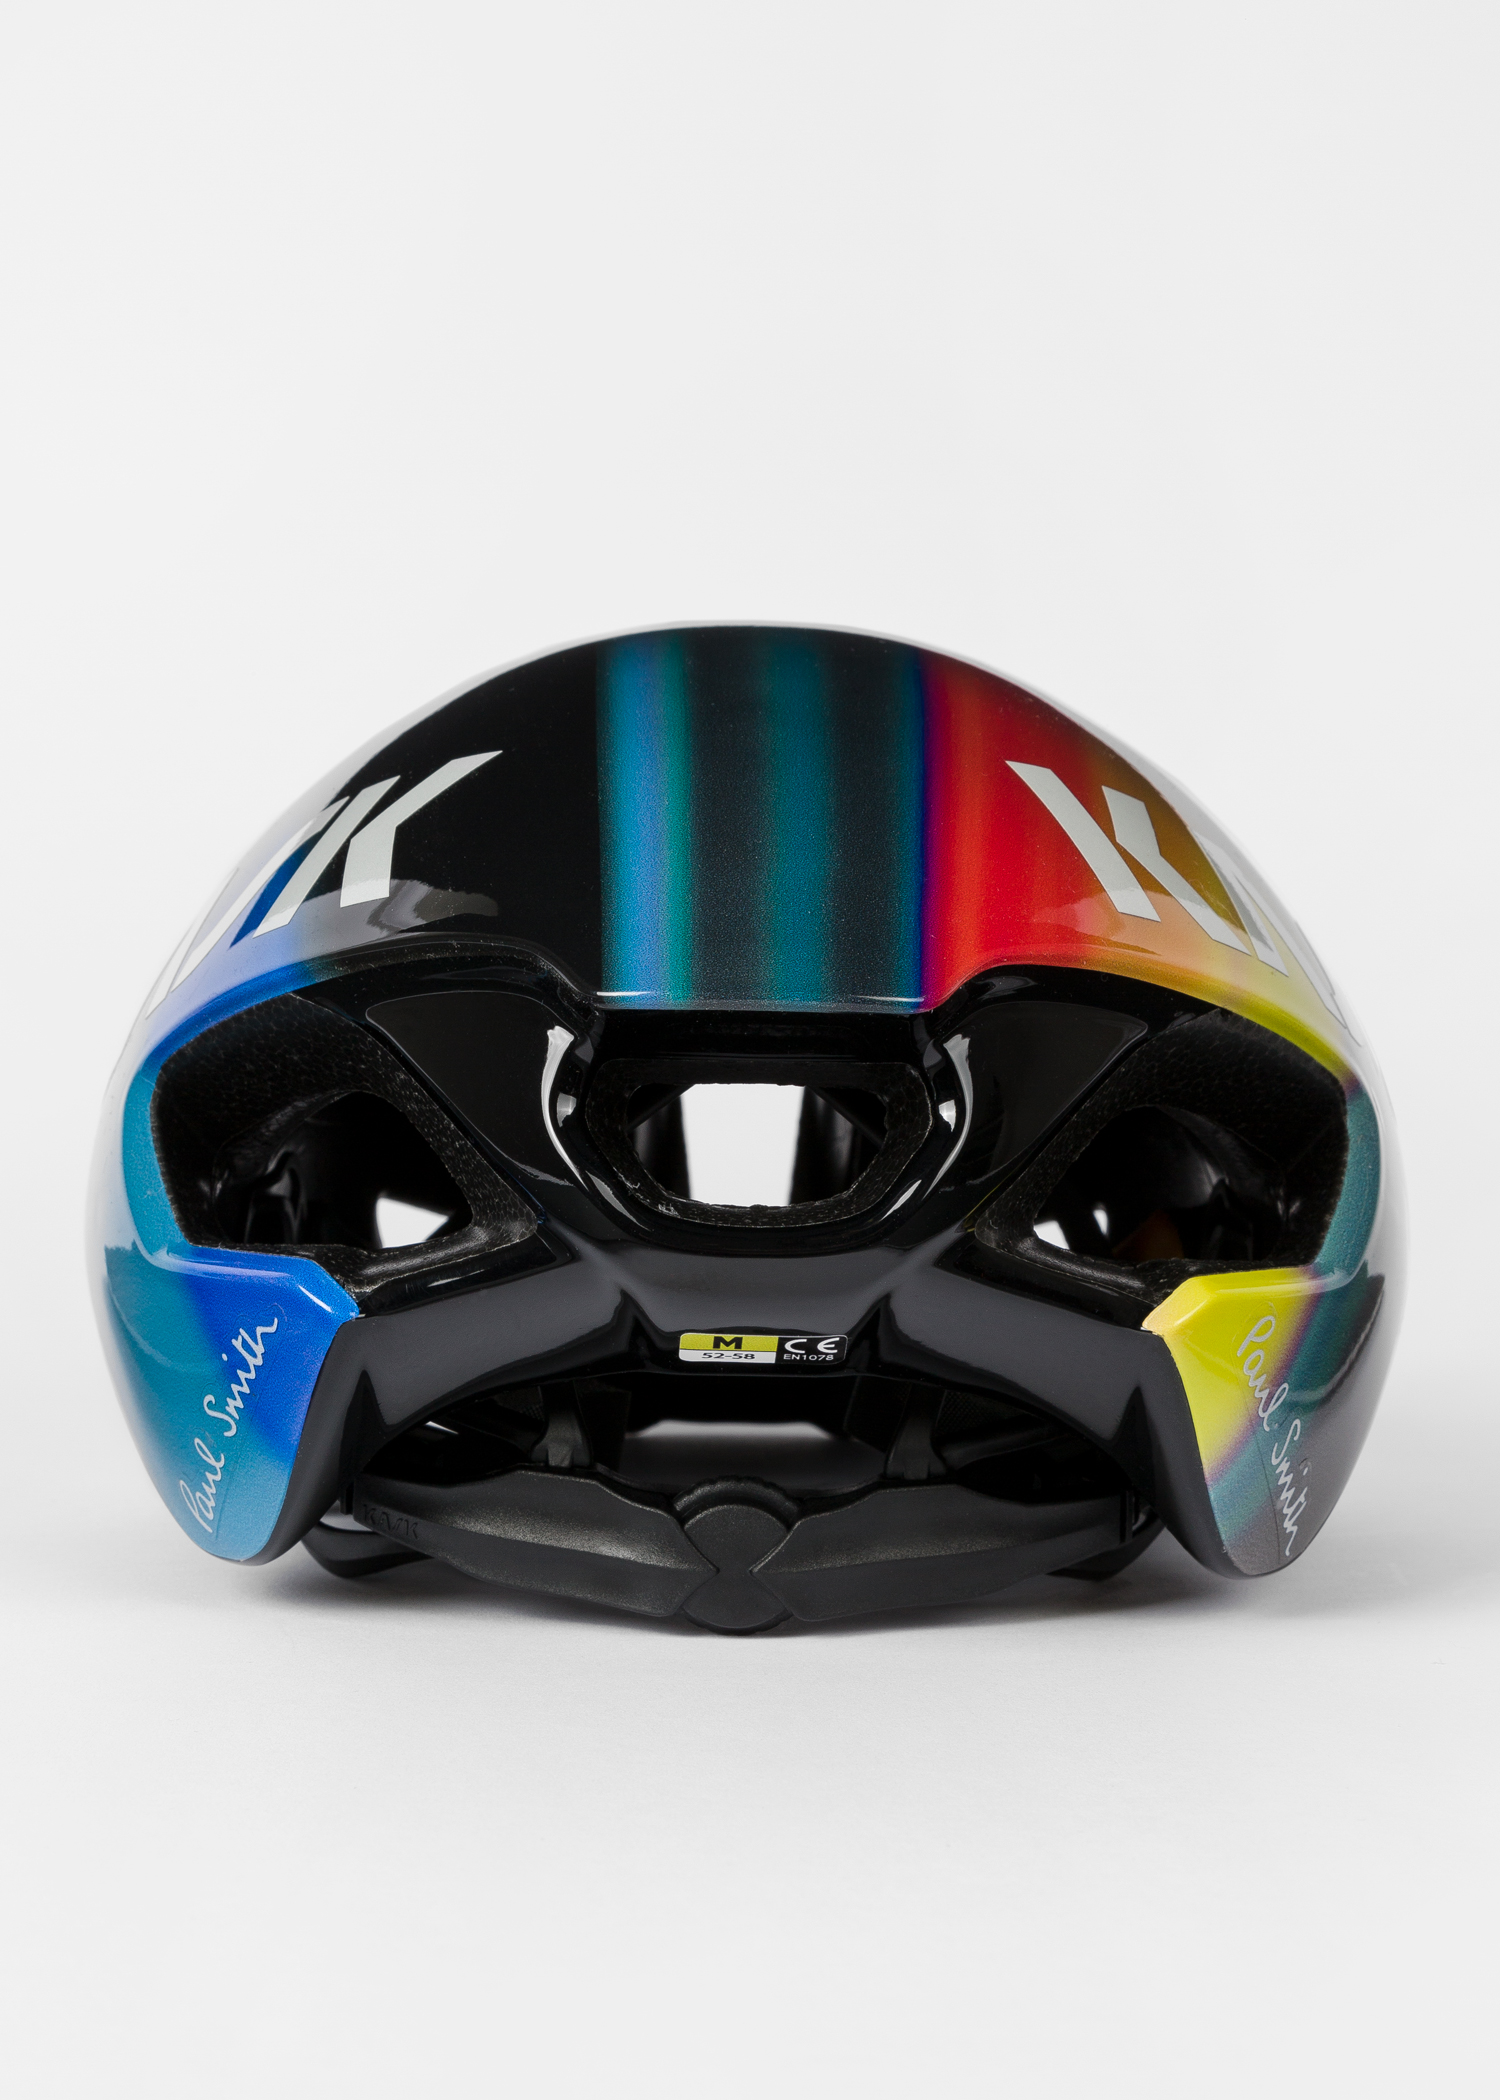 Back view - Paul Smith + Kask 'Rainbow Stripe' Utopia Cycling Helmet